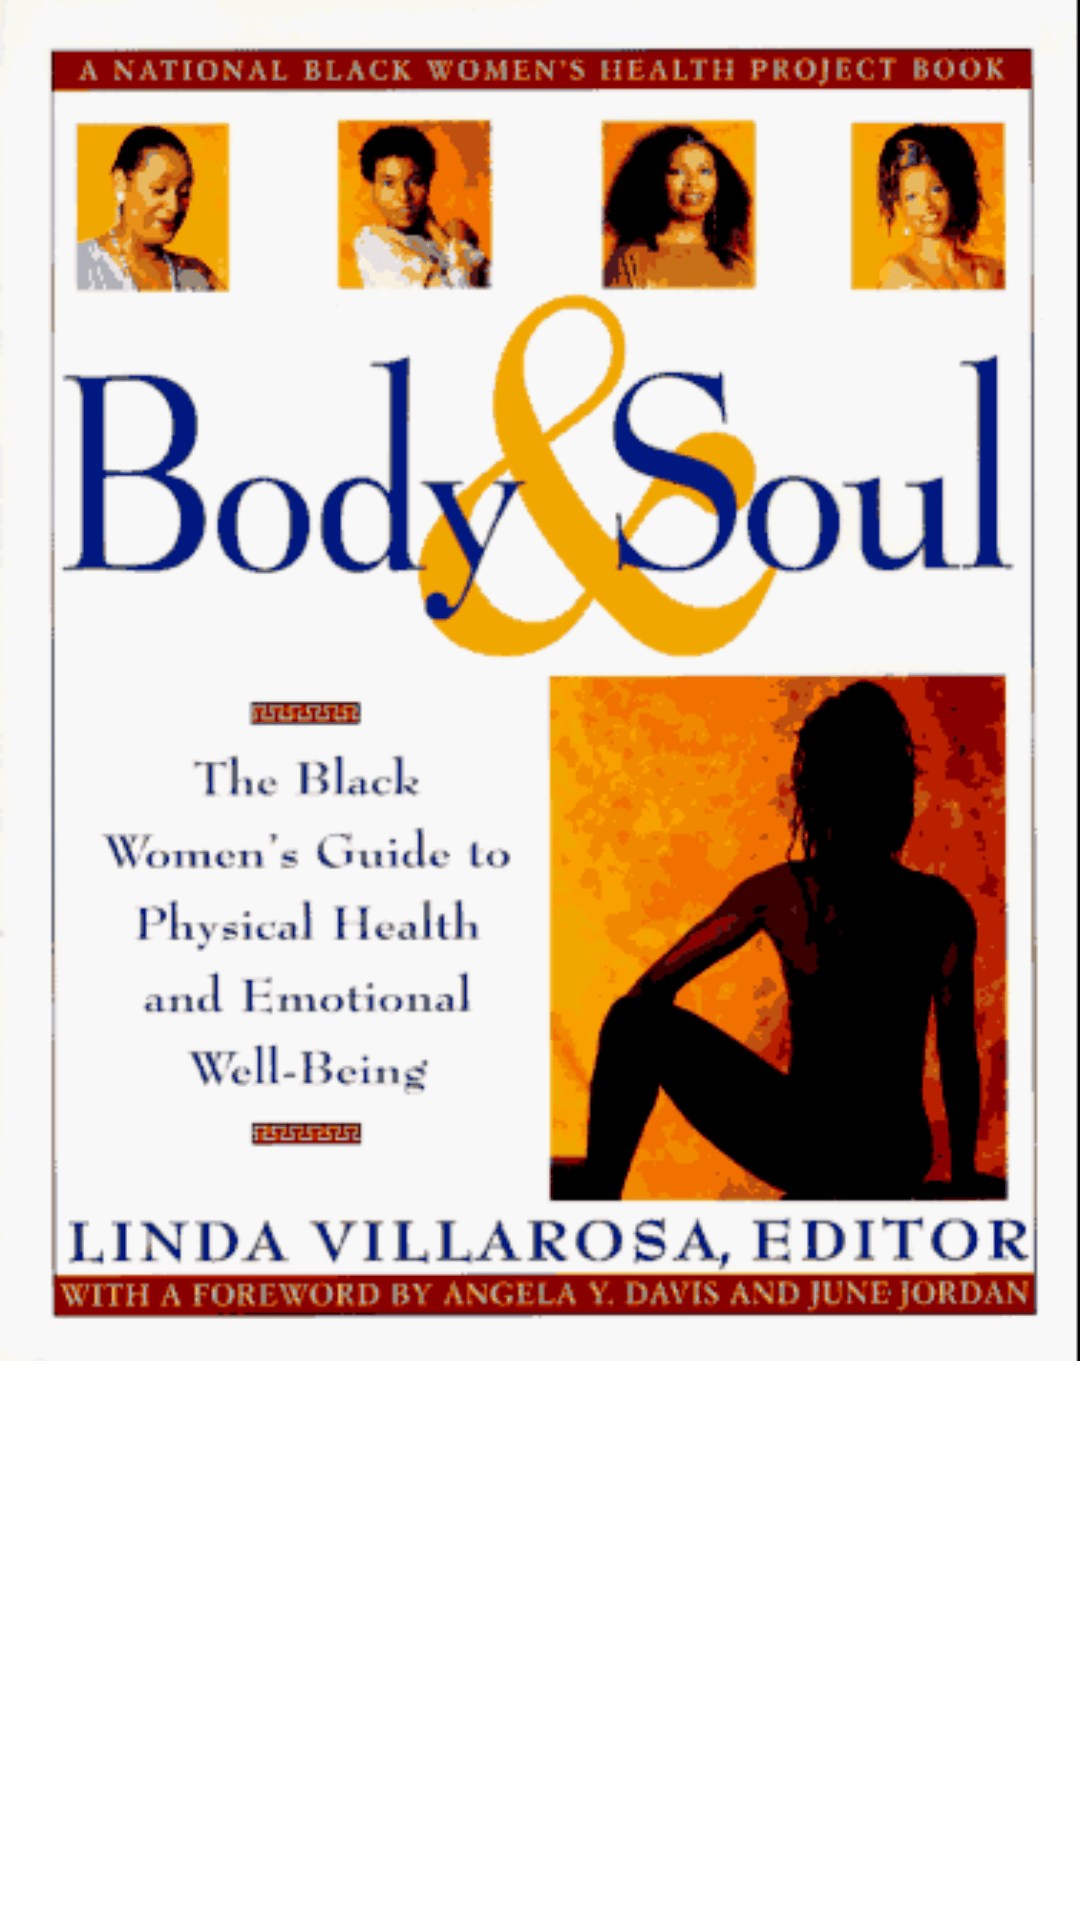 Body and Soul by Linda Villarosa